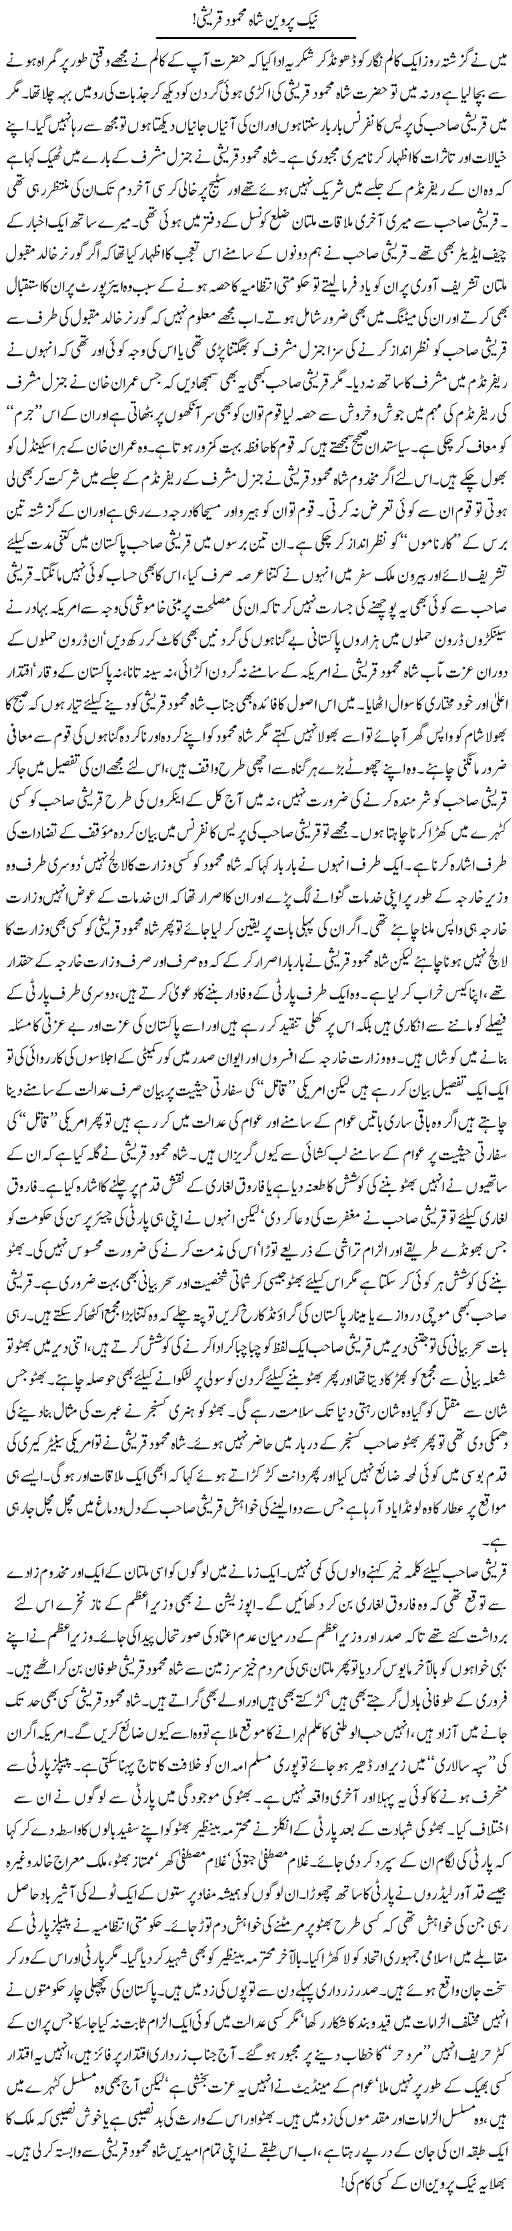 Shah Mehmood Qureshi Express Column Asadullah Ghalib 20 February 2011